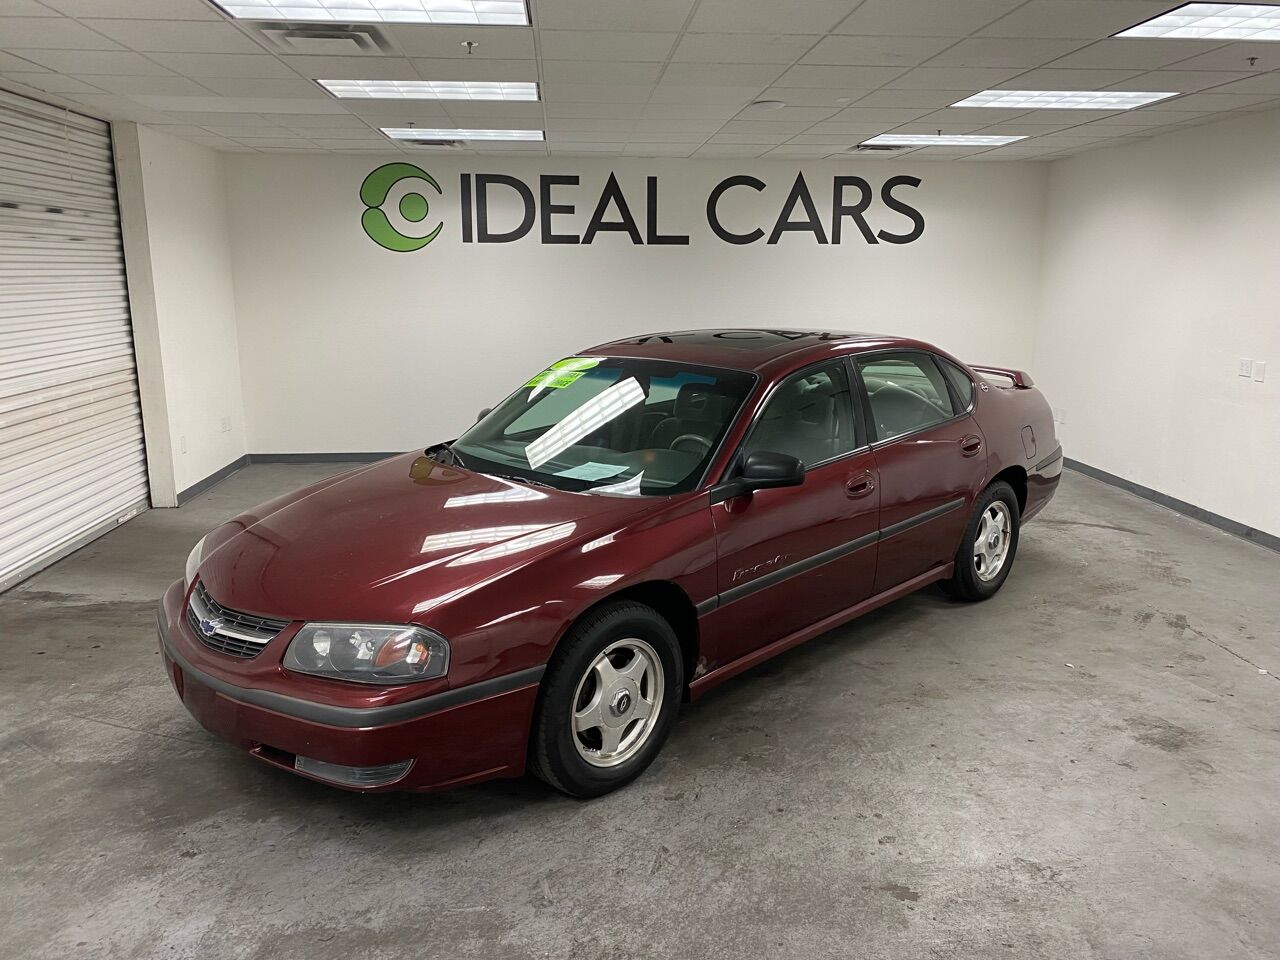 2000 Chevrolet Impala For Sale - Carsforsale.com®